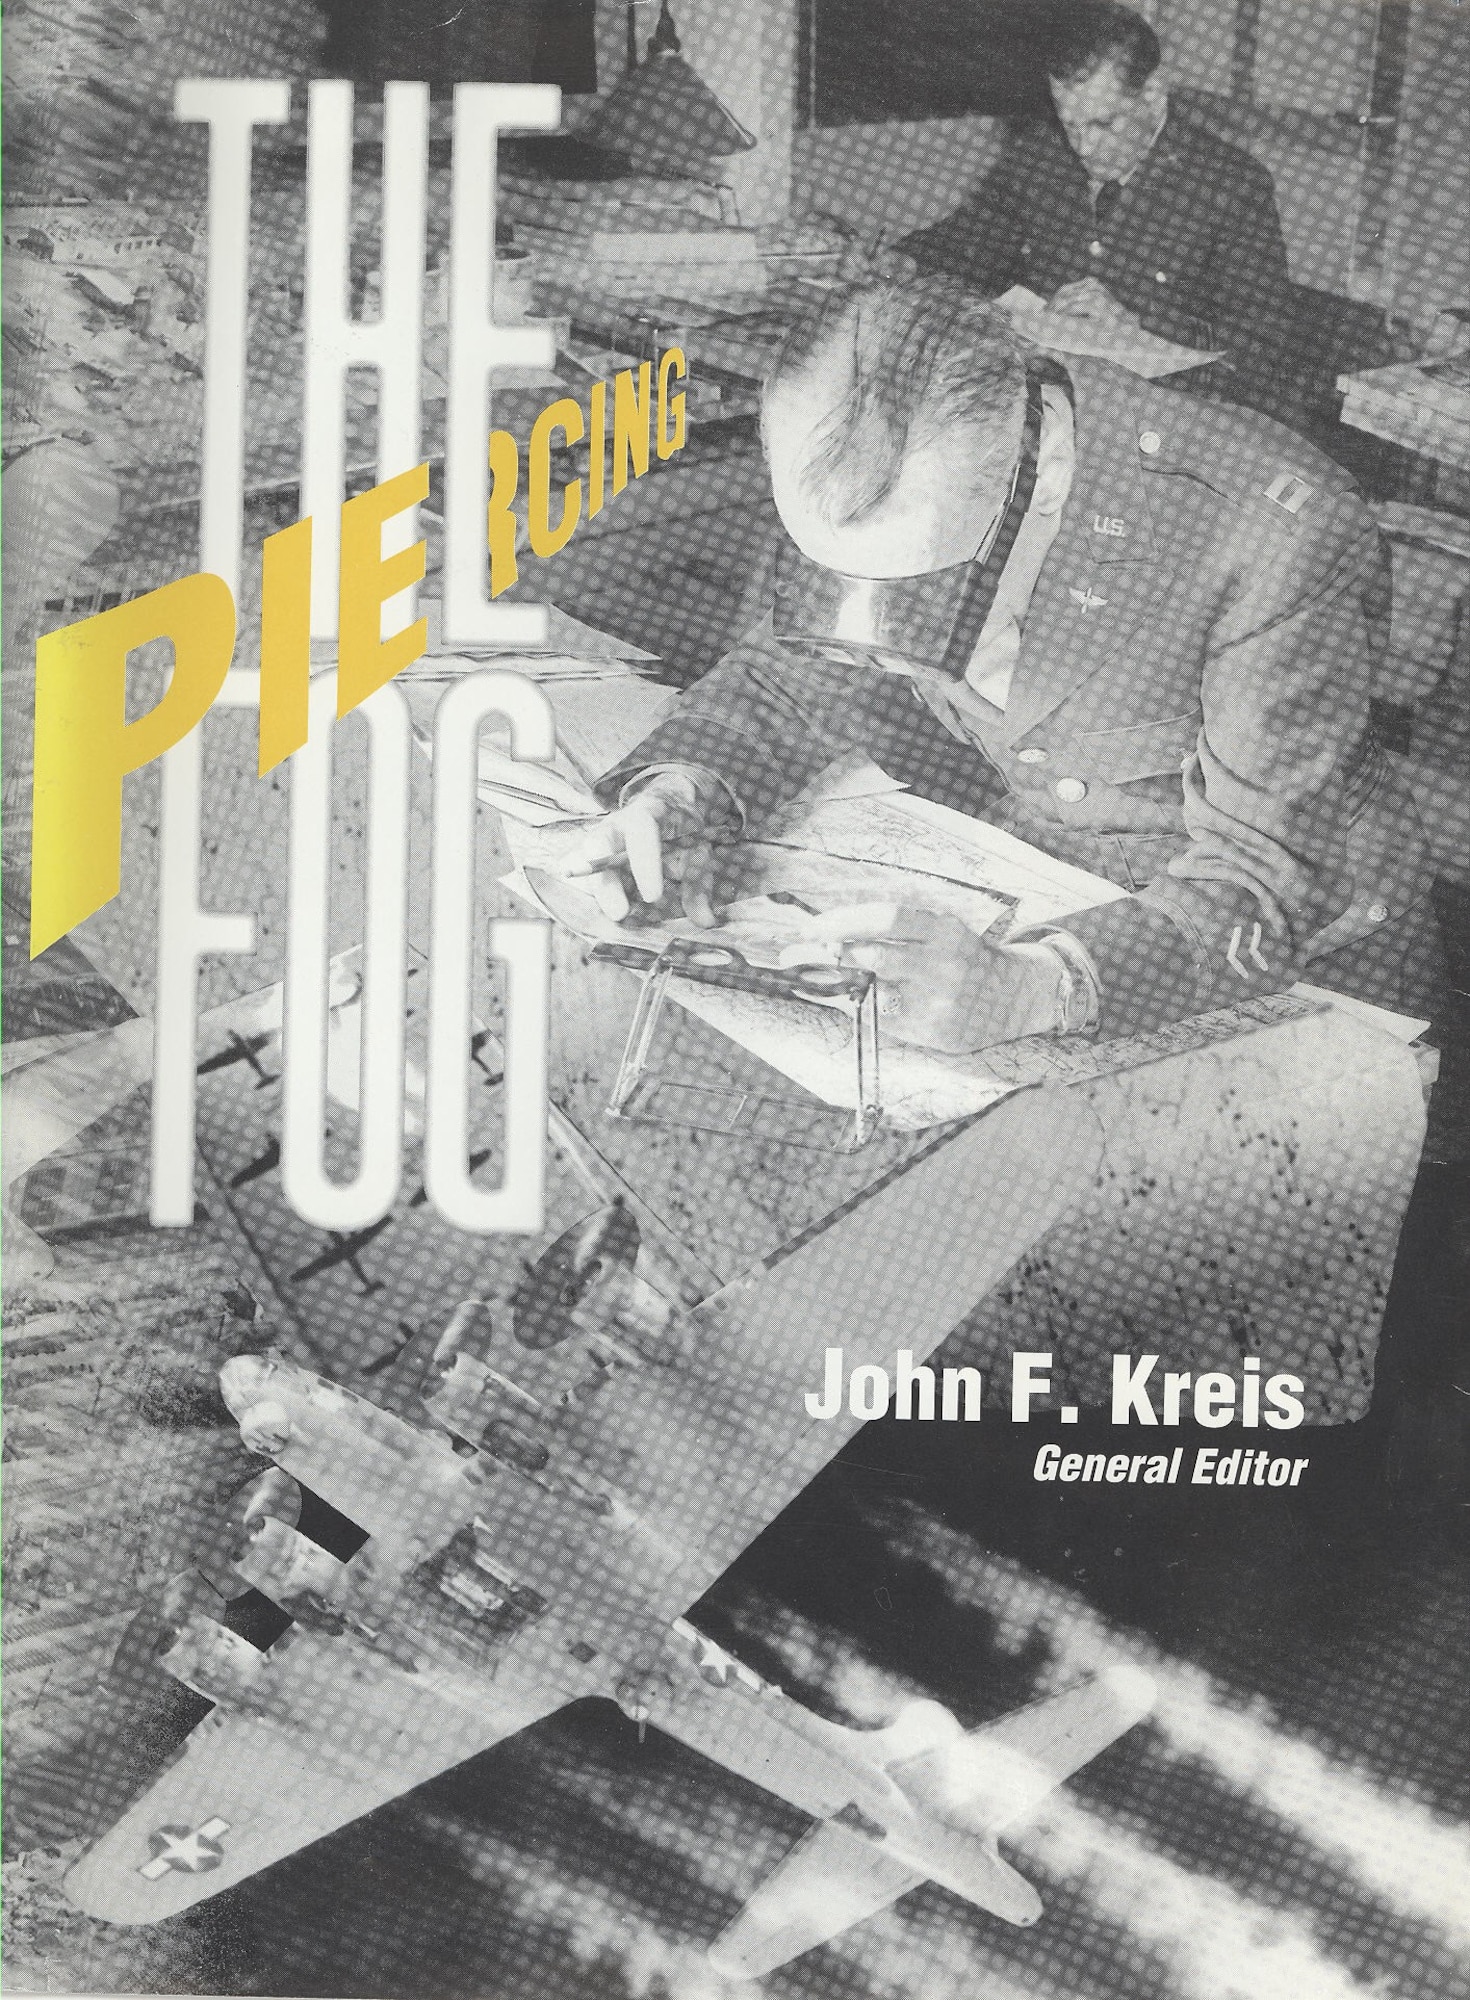 Piercing the Fog: Intelligence and Army Air Force Operations in World War II, John R. Kreis, general editor